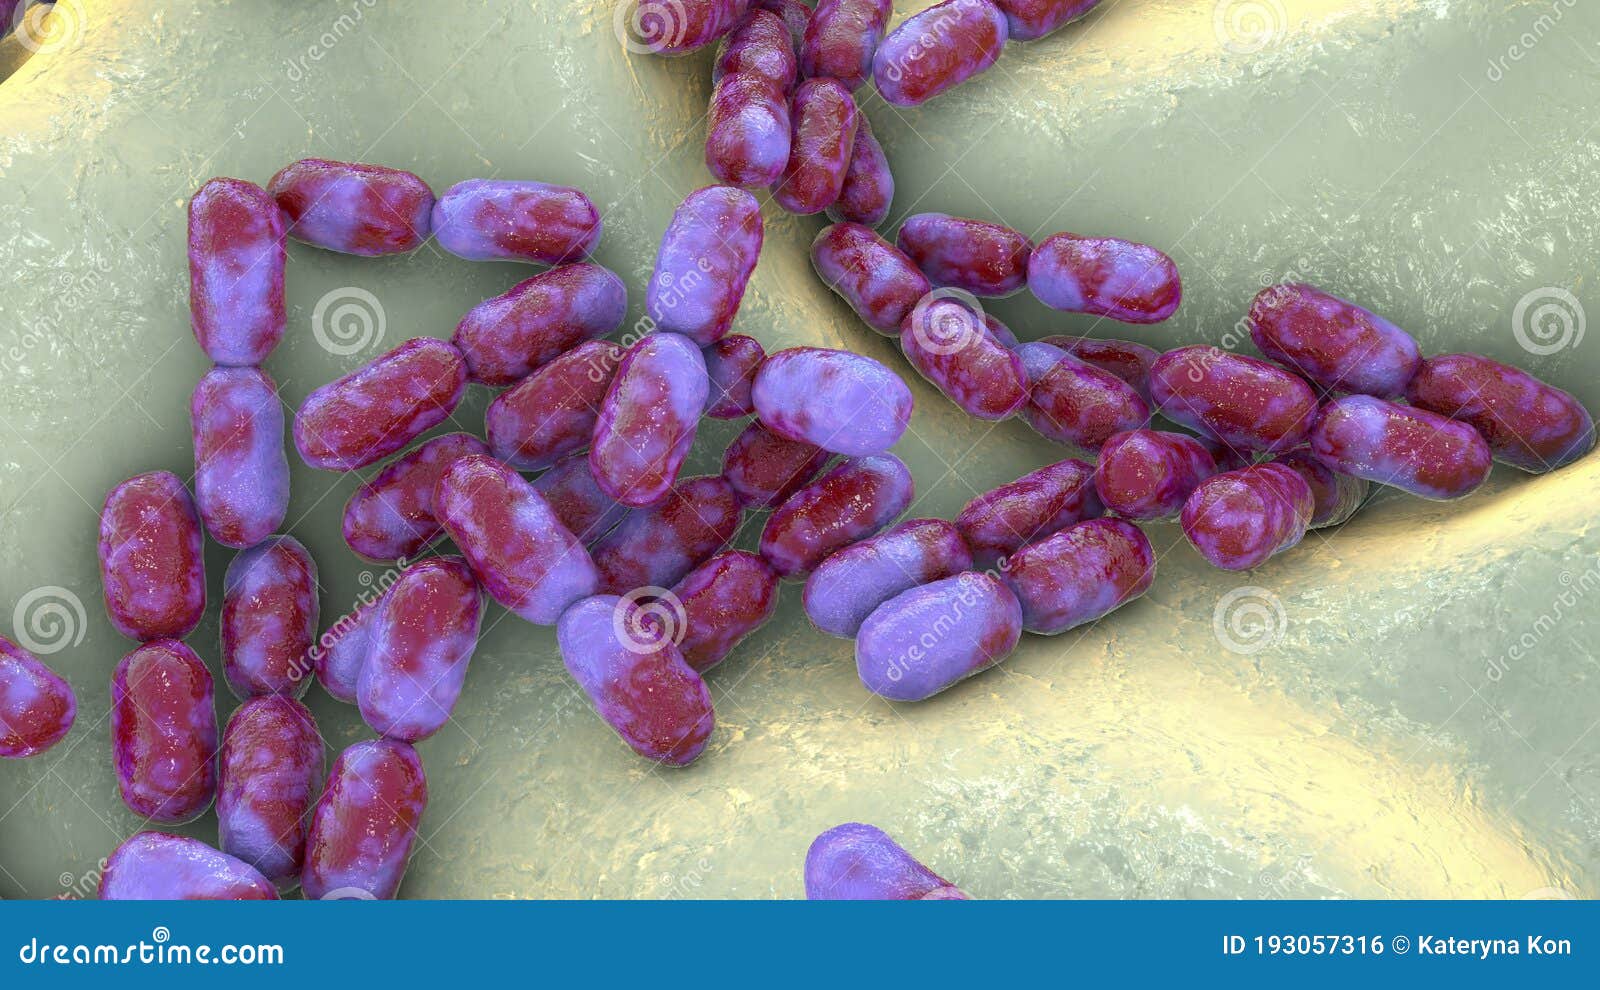 kingella bacteria, 